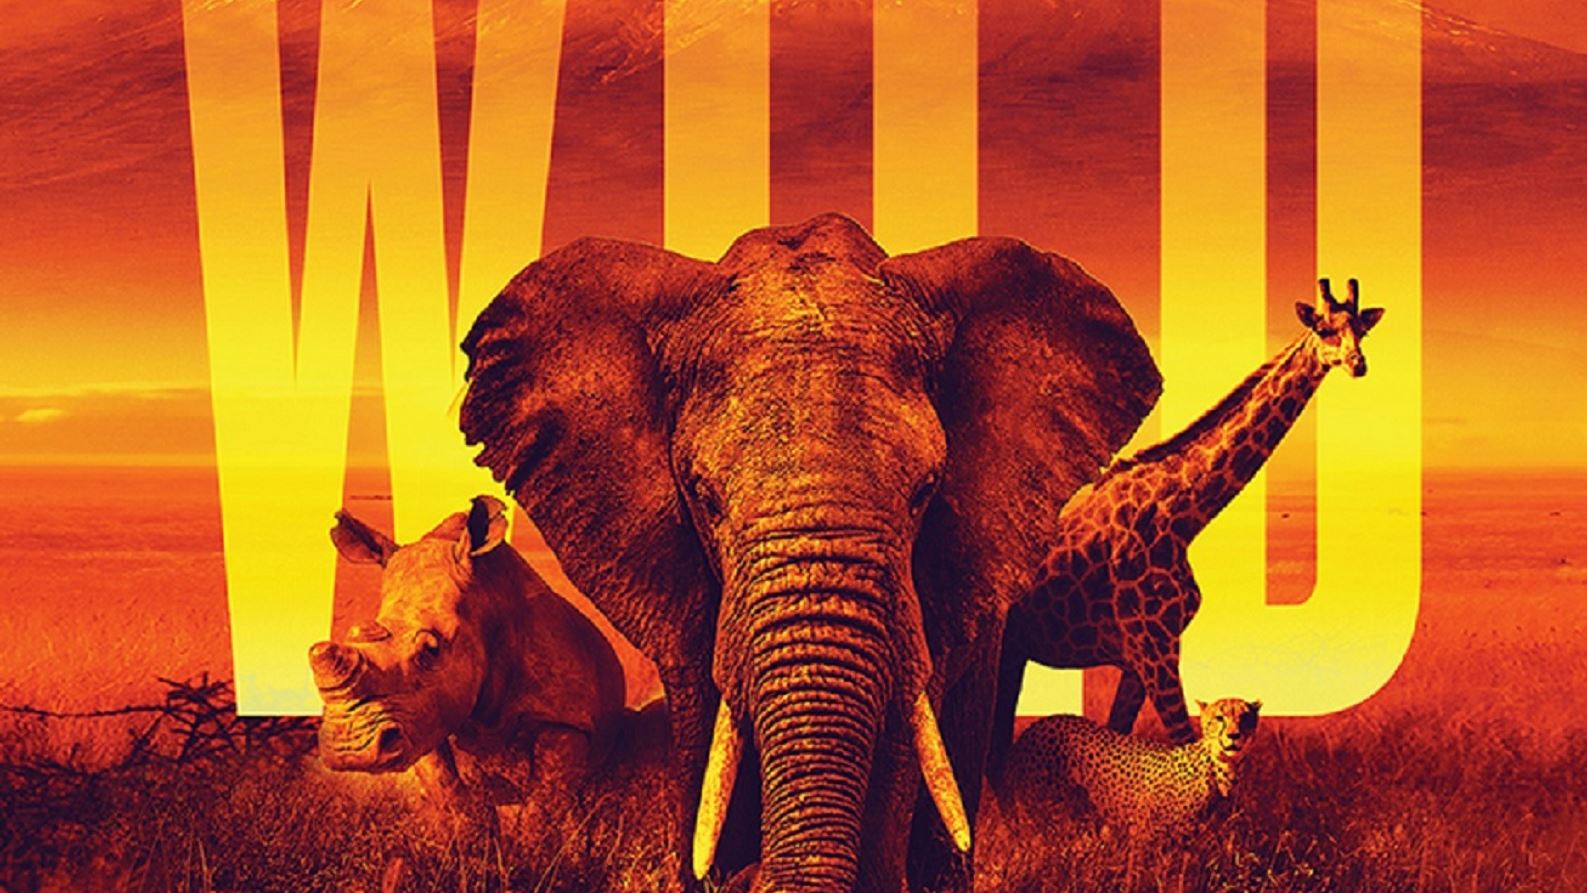 Wynn Palace presents "WILD: An Immersive Safari Experience" at Illuminarium